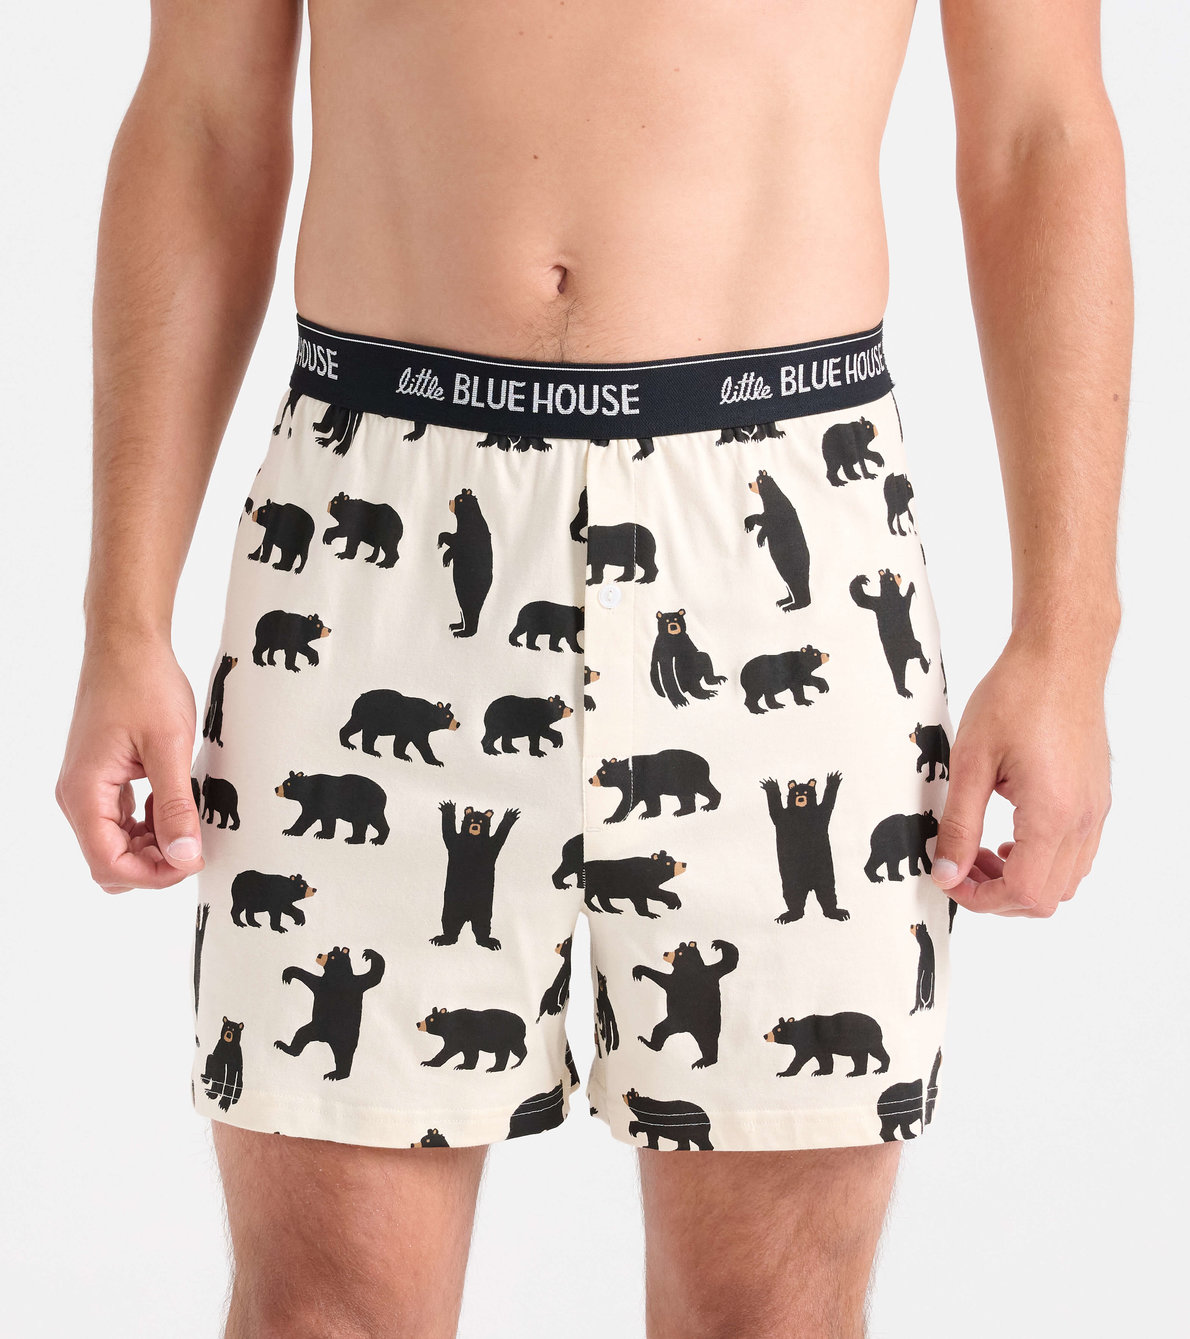 View larger image of Black Bears Men's Boxer Shorts